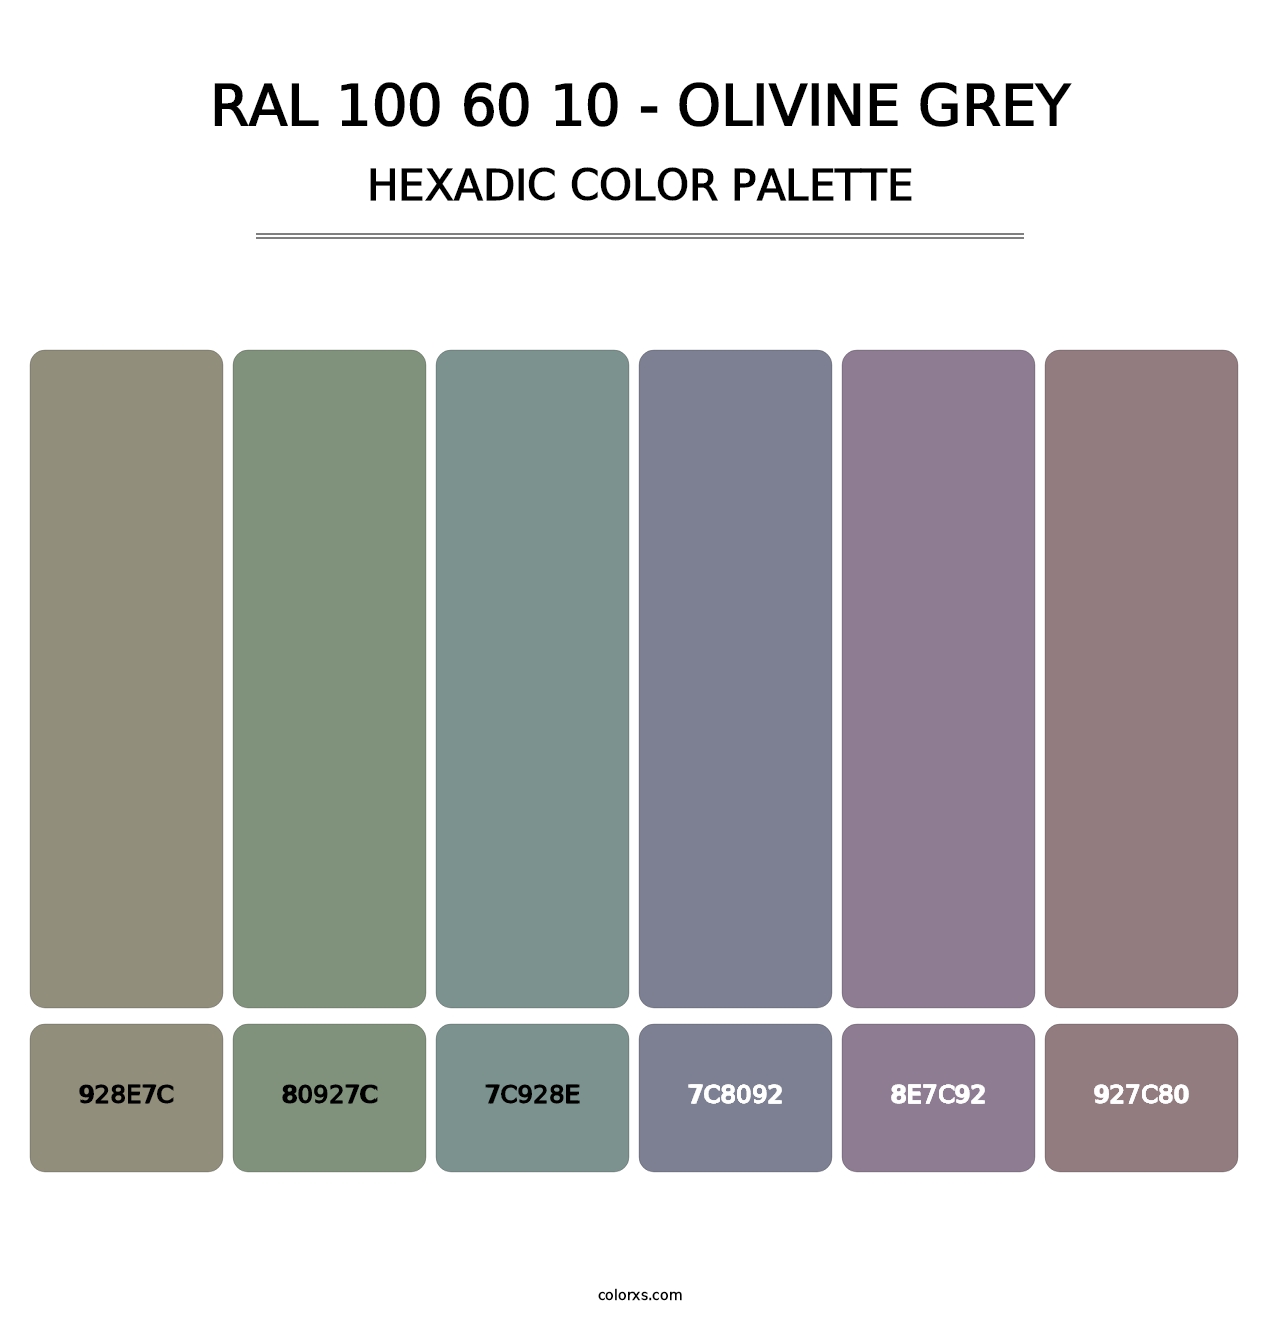 RAL 100 60 10 - Olivine Grey - Hexadic Color Palette